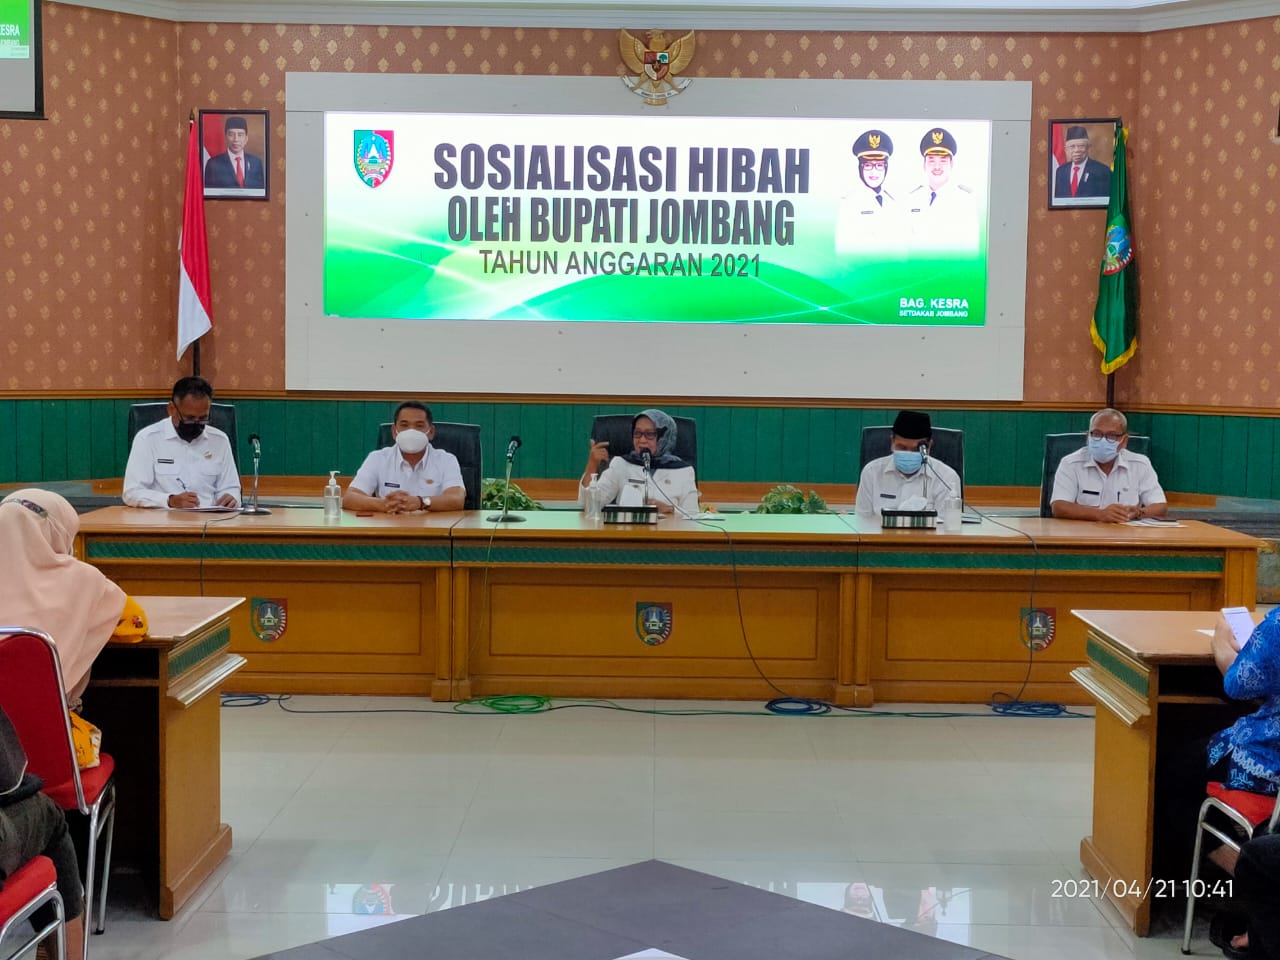 Foto : Bupati Jombang saat Sosialisasi Hibah Tahun Anggaran 2021 Kabupaten Jombang